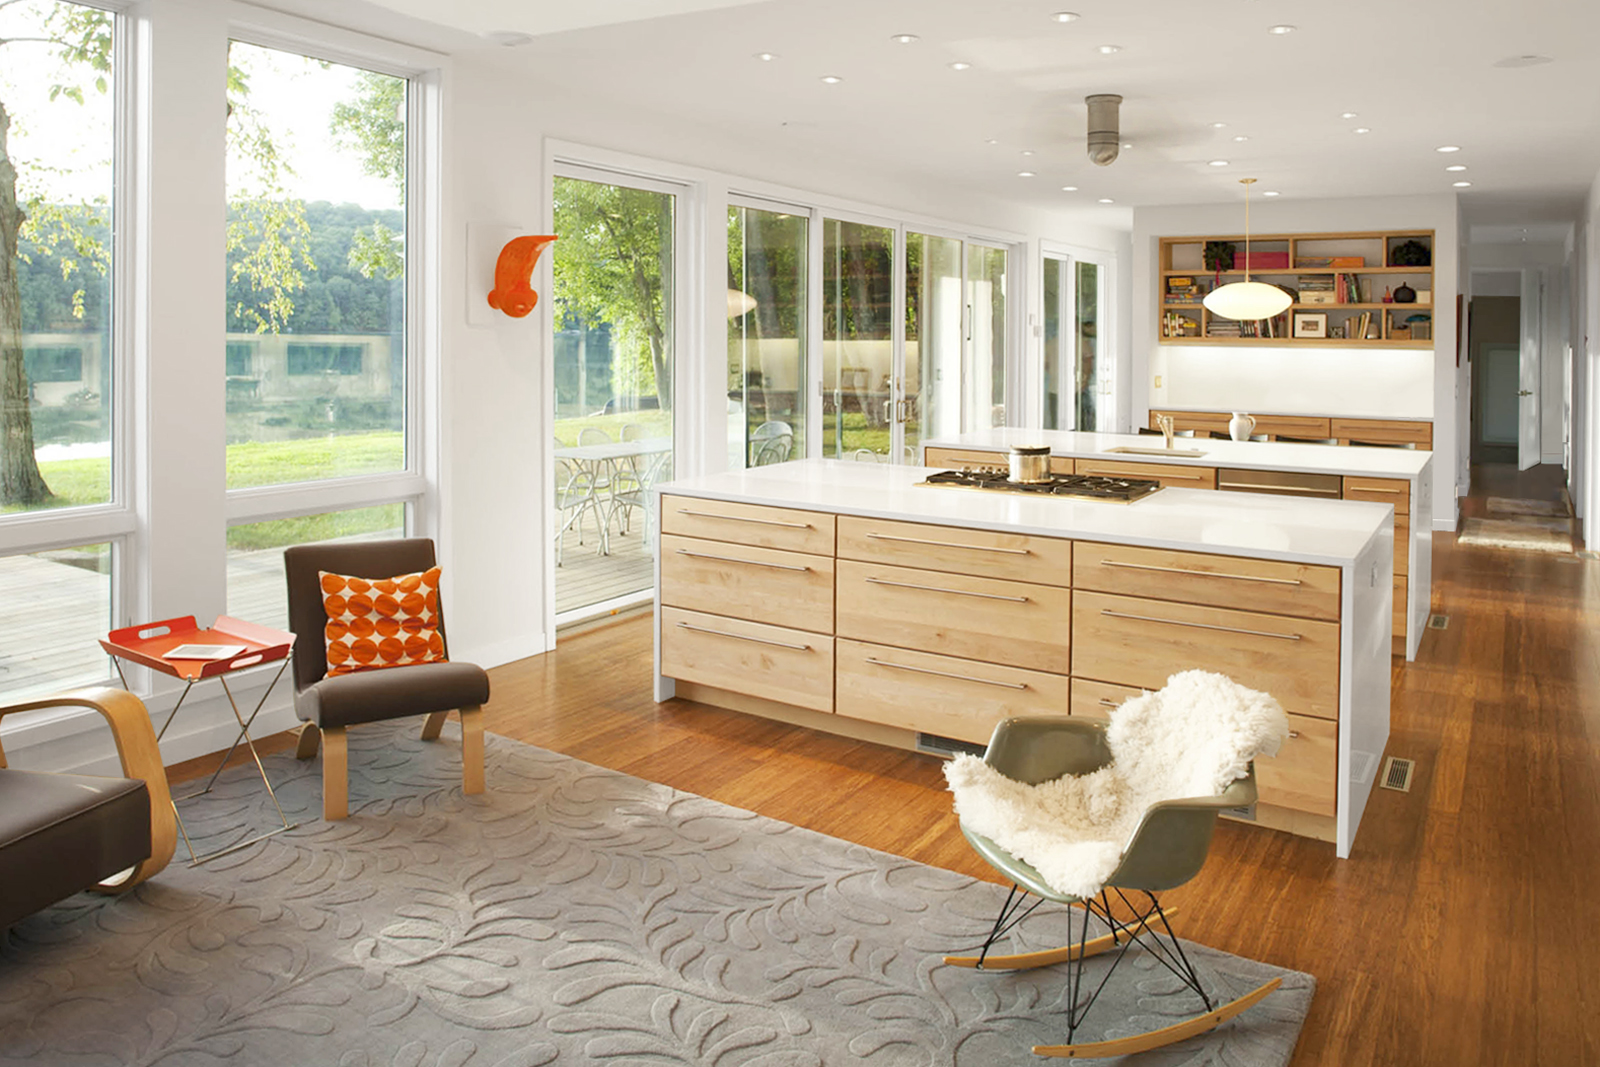 06-res4-resolution-4-architecture-modern-modular-home-prefab-house-lake-iosco-interior-kitchen-living.jpg